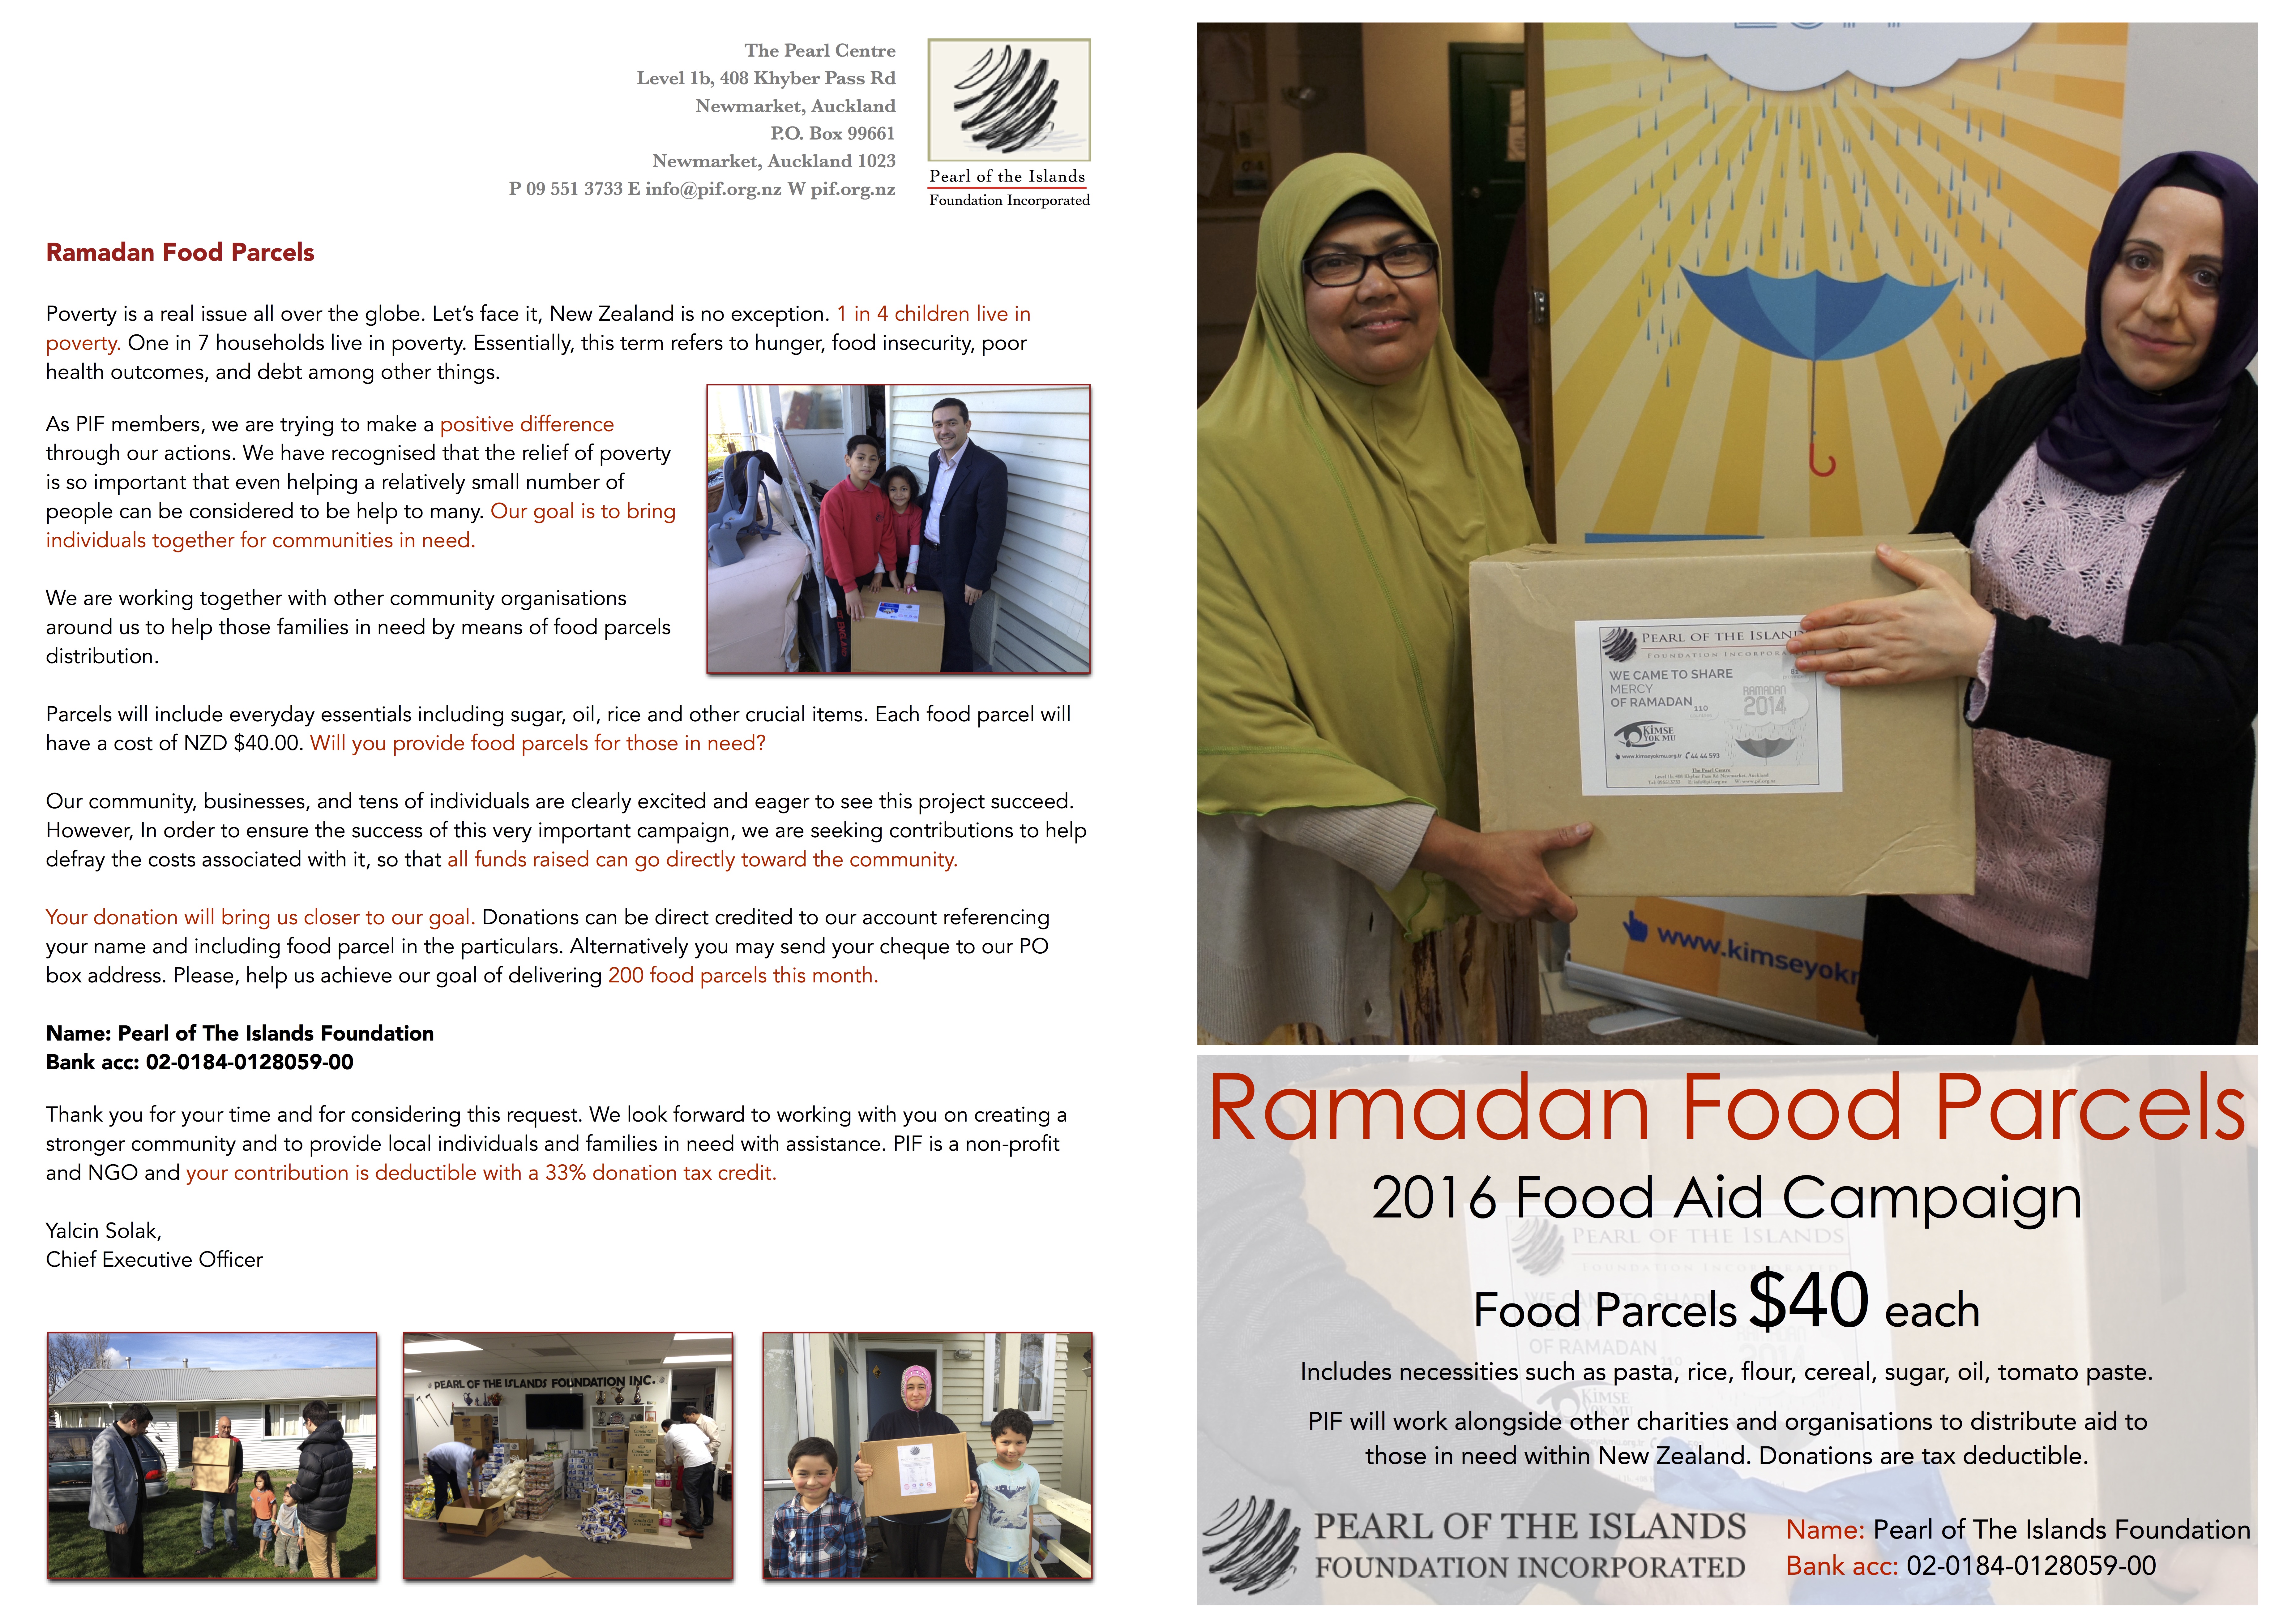 2016 Food Aid Campaign